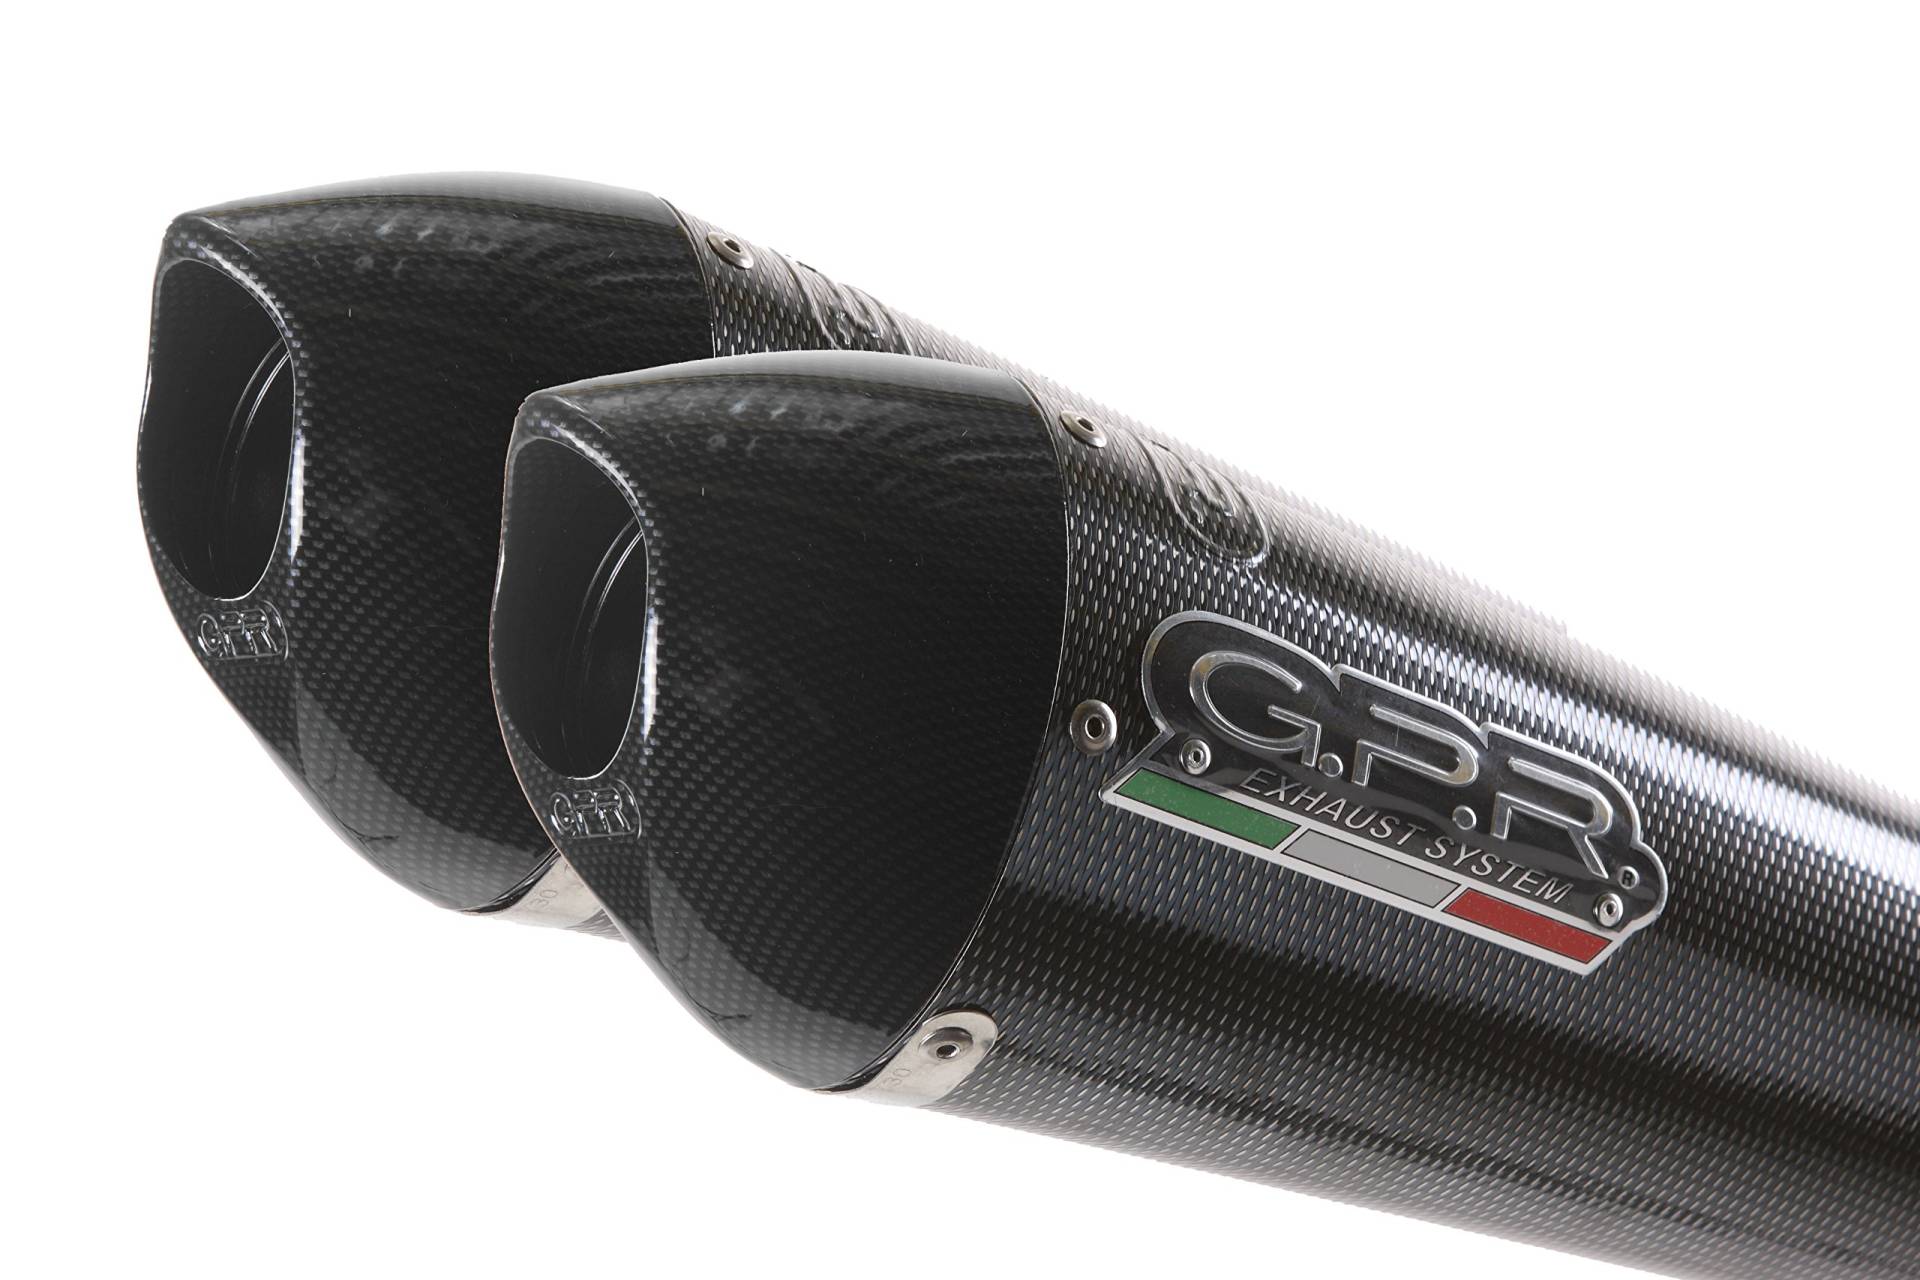 GPR Auspuff Endkappe – Ducati Monster 1000 2003/05 Dual HOMOLOGATED Slip Exhaust System with CATALYSTS High Level by GPR Exhaust Systems der EVO Poppy Line von GPR EXHAUST SYSTEM